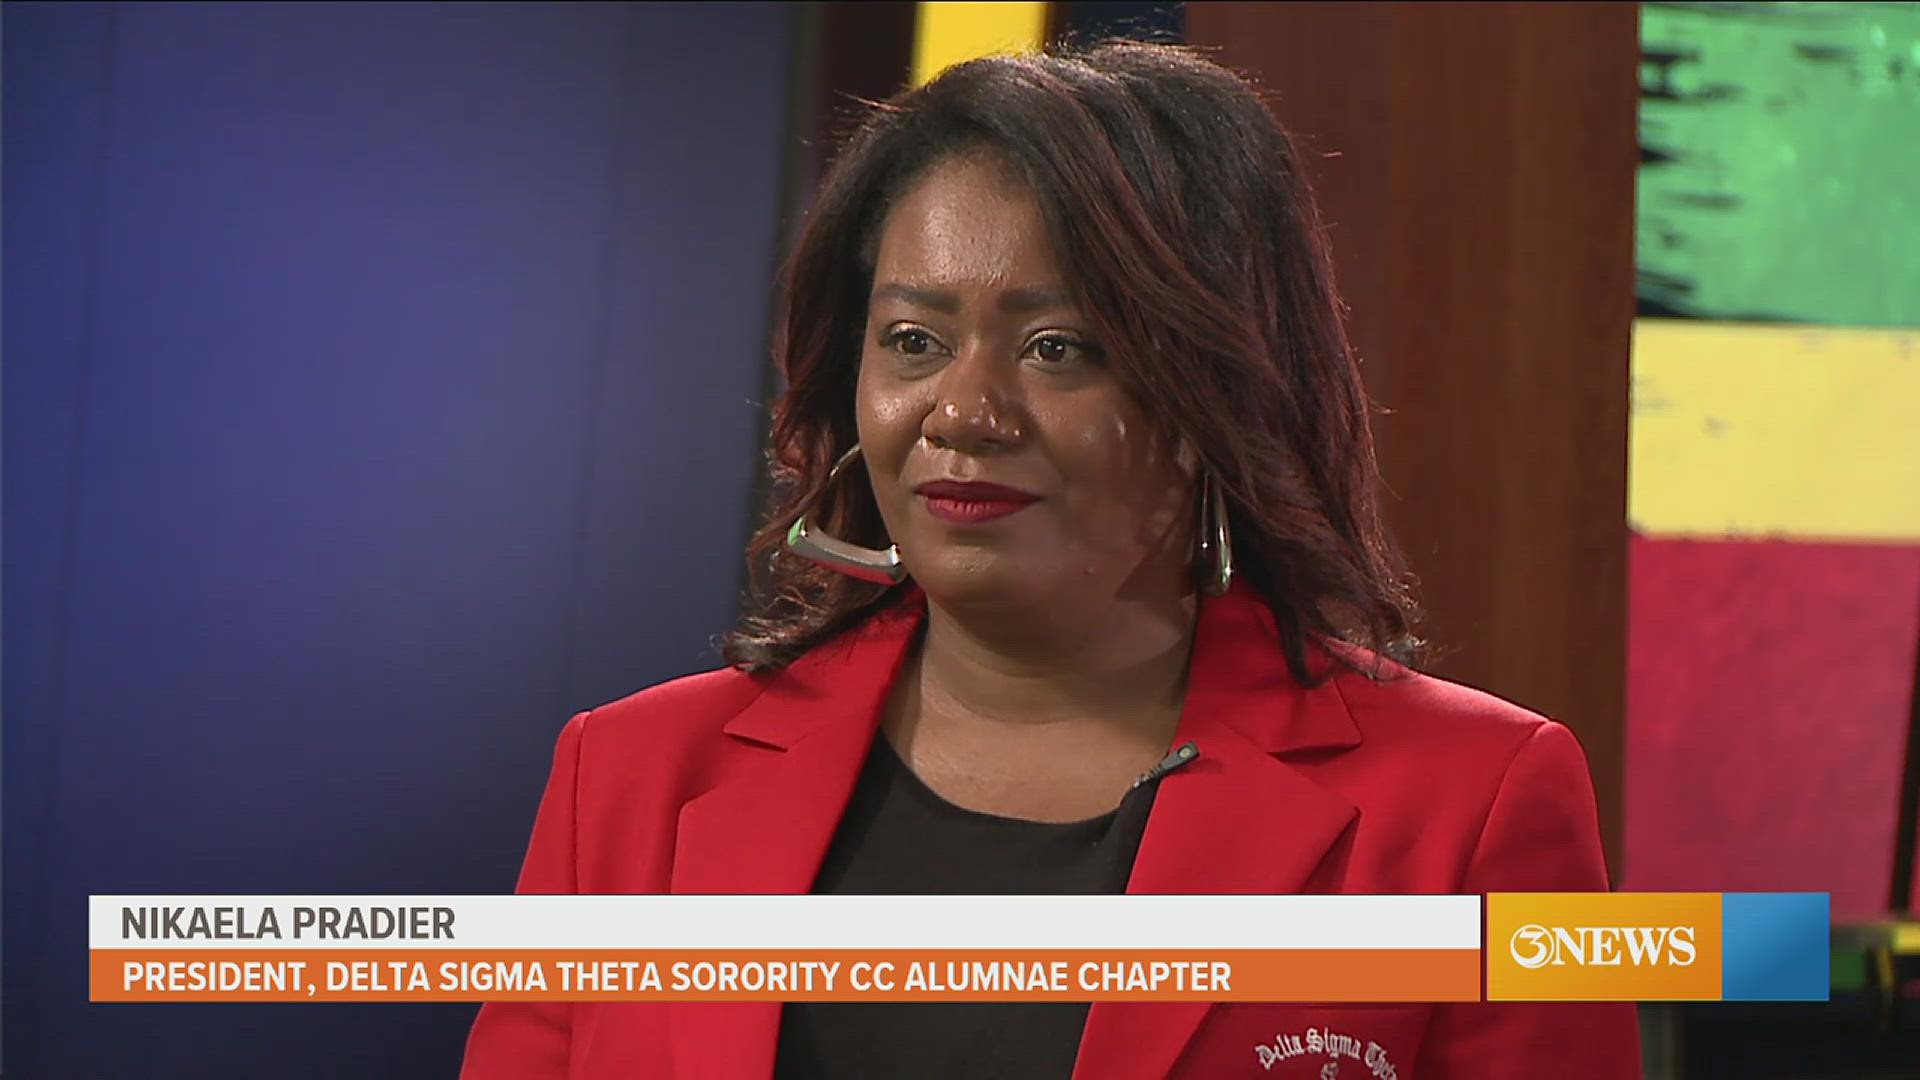 Nikela Pradier, president of the Delta Sigma Theta sorority in Corpus Christi, said she wants to see change.